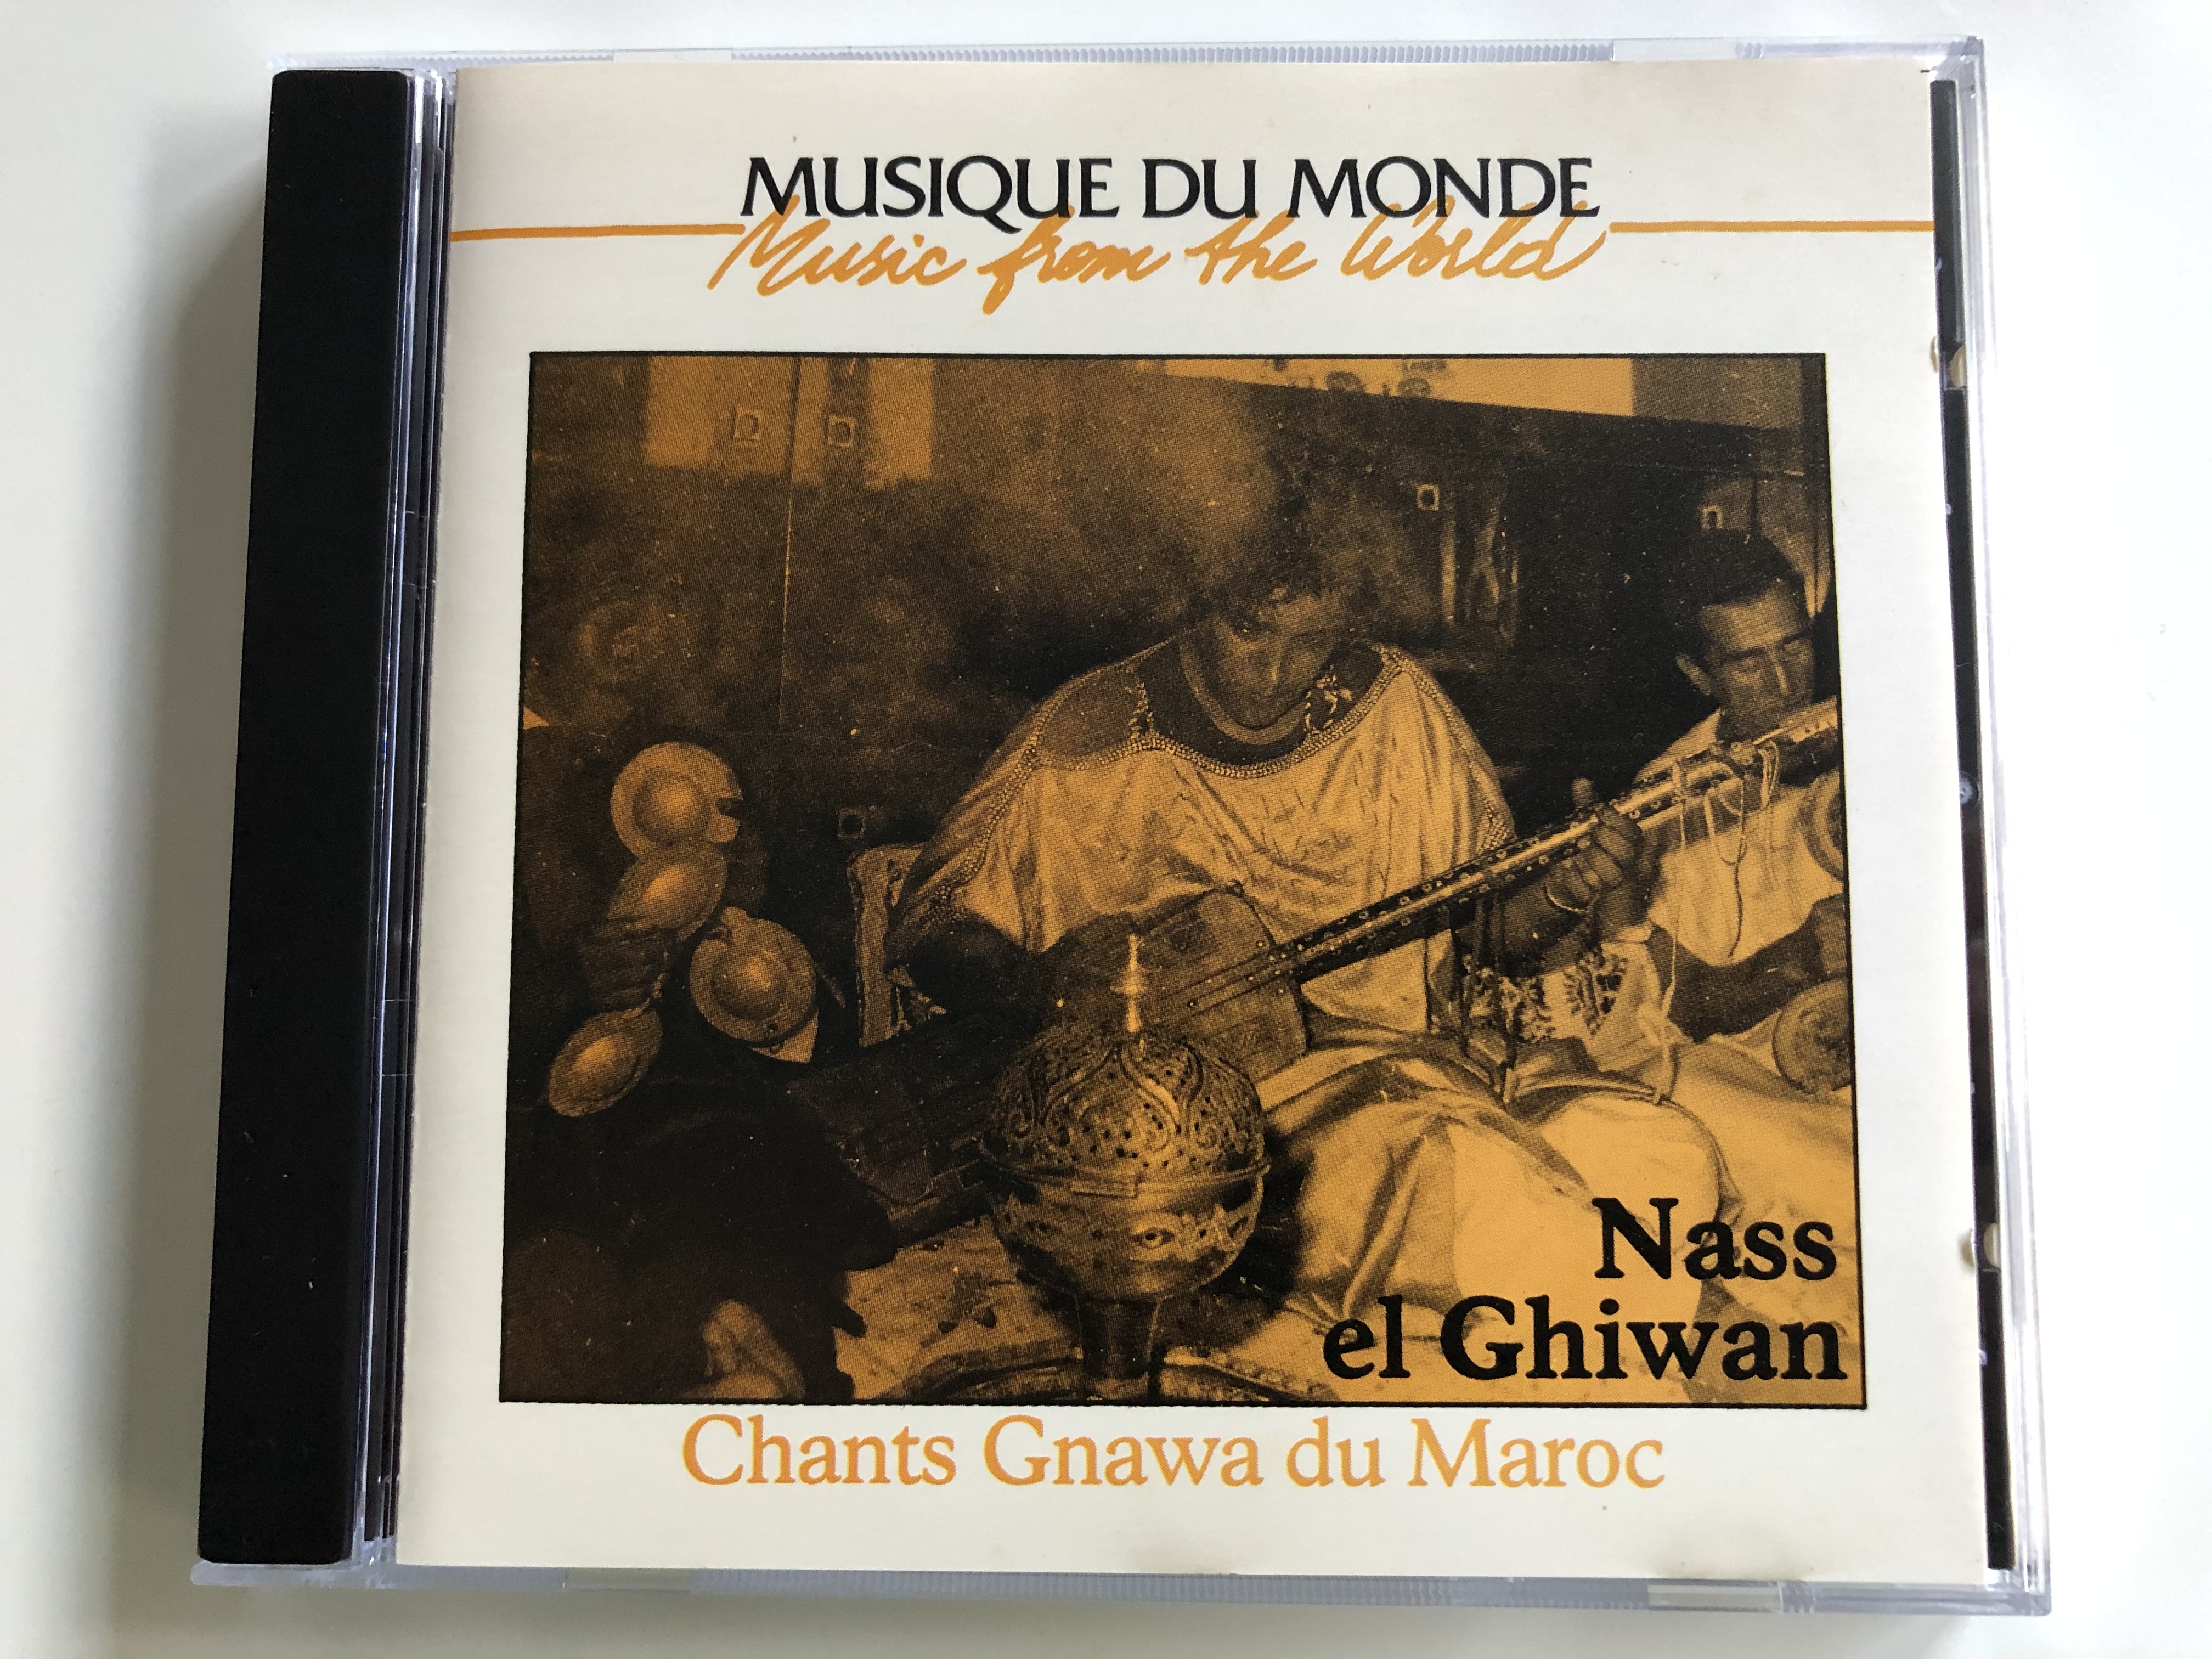 musique-du-monde-music-from-the-world-nass-el-ghiwan-chants-gnawa-du-maroc-buda-records-audio-cd-82468-2-1-.jpg